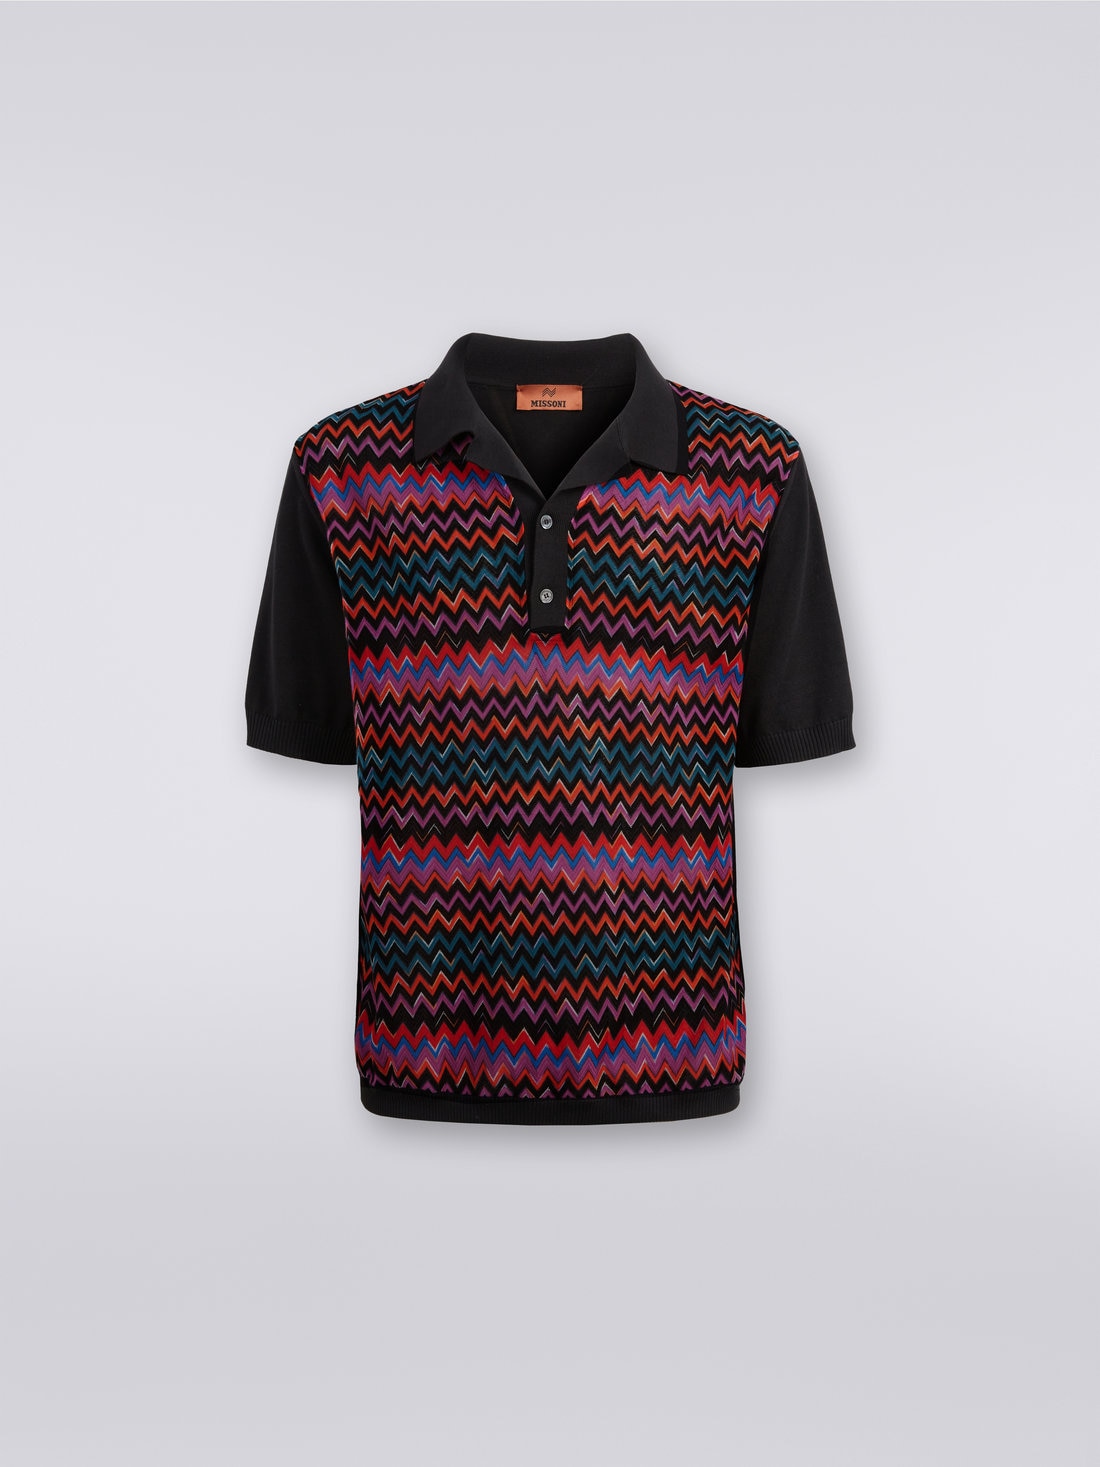 Short-sleeved polo shirt in cotton, viscose and silk chevron, Black    - US23W203BK026MSM8WN - 0